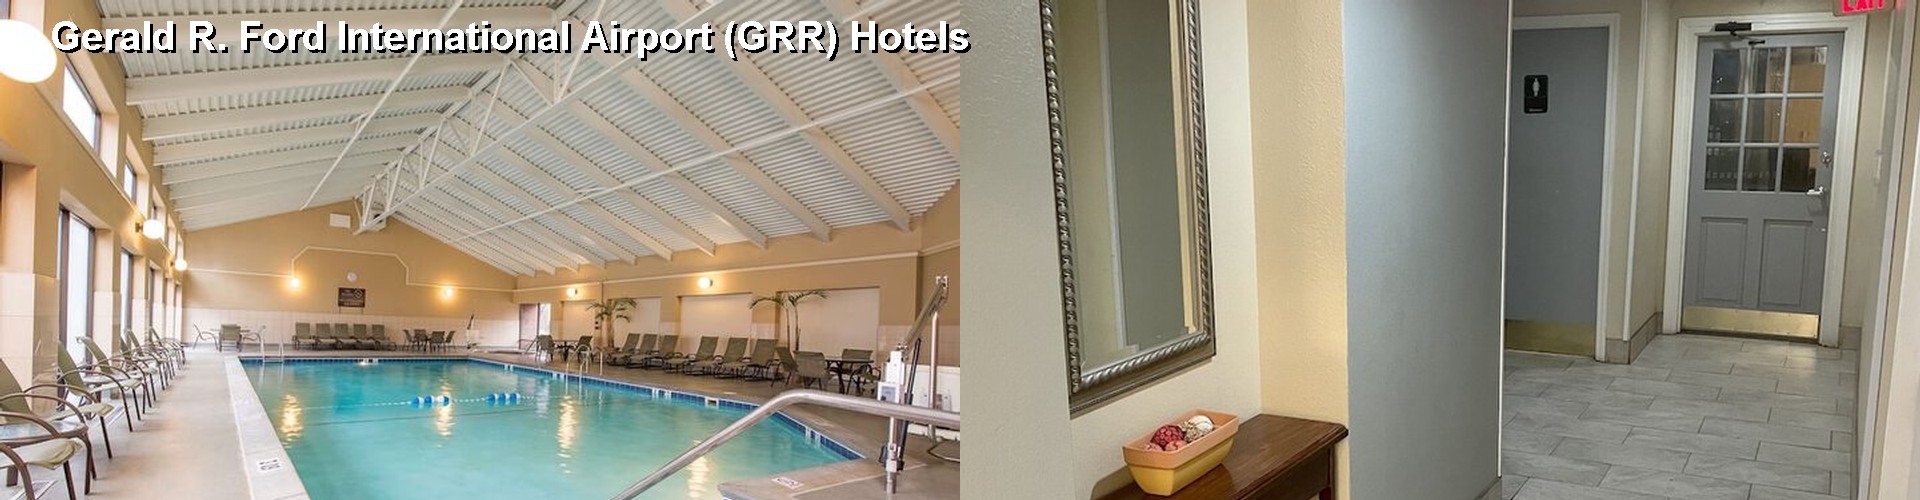 2 Best Hotels near Gerald R. Ford International Airport (GRR)